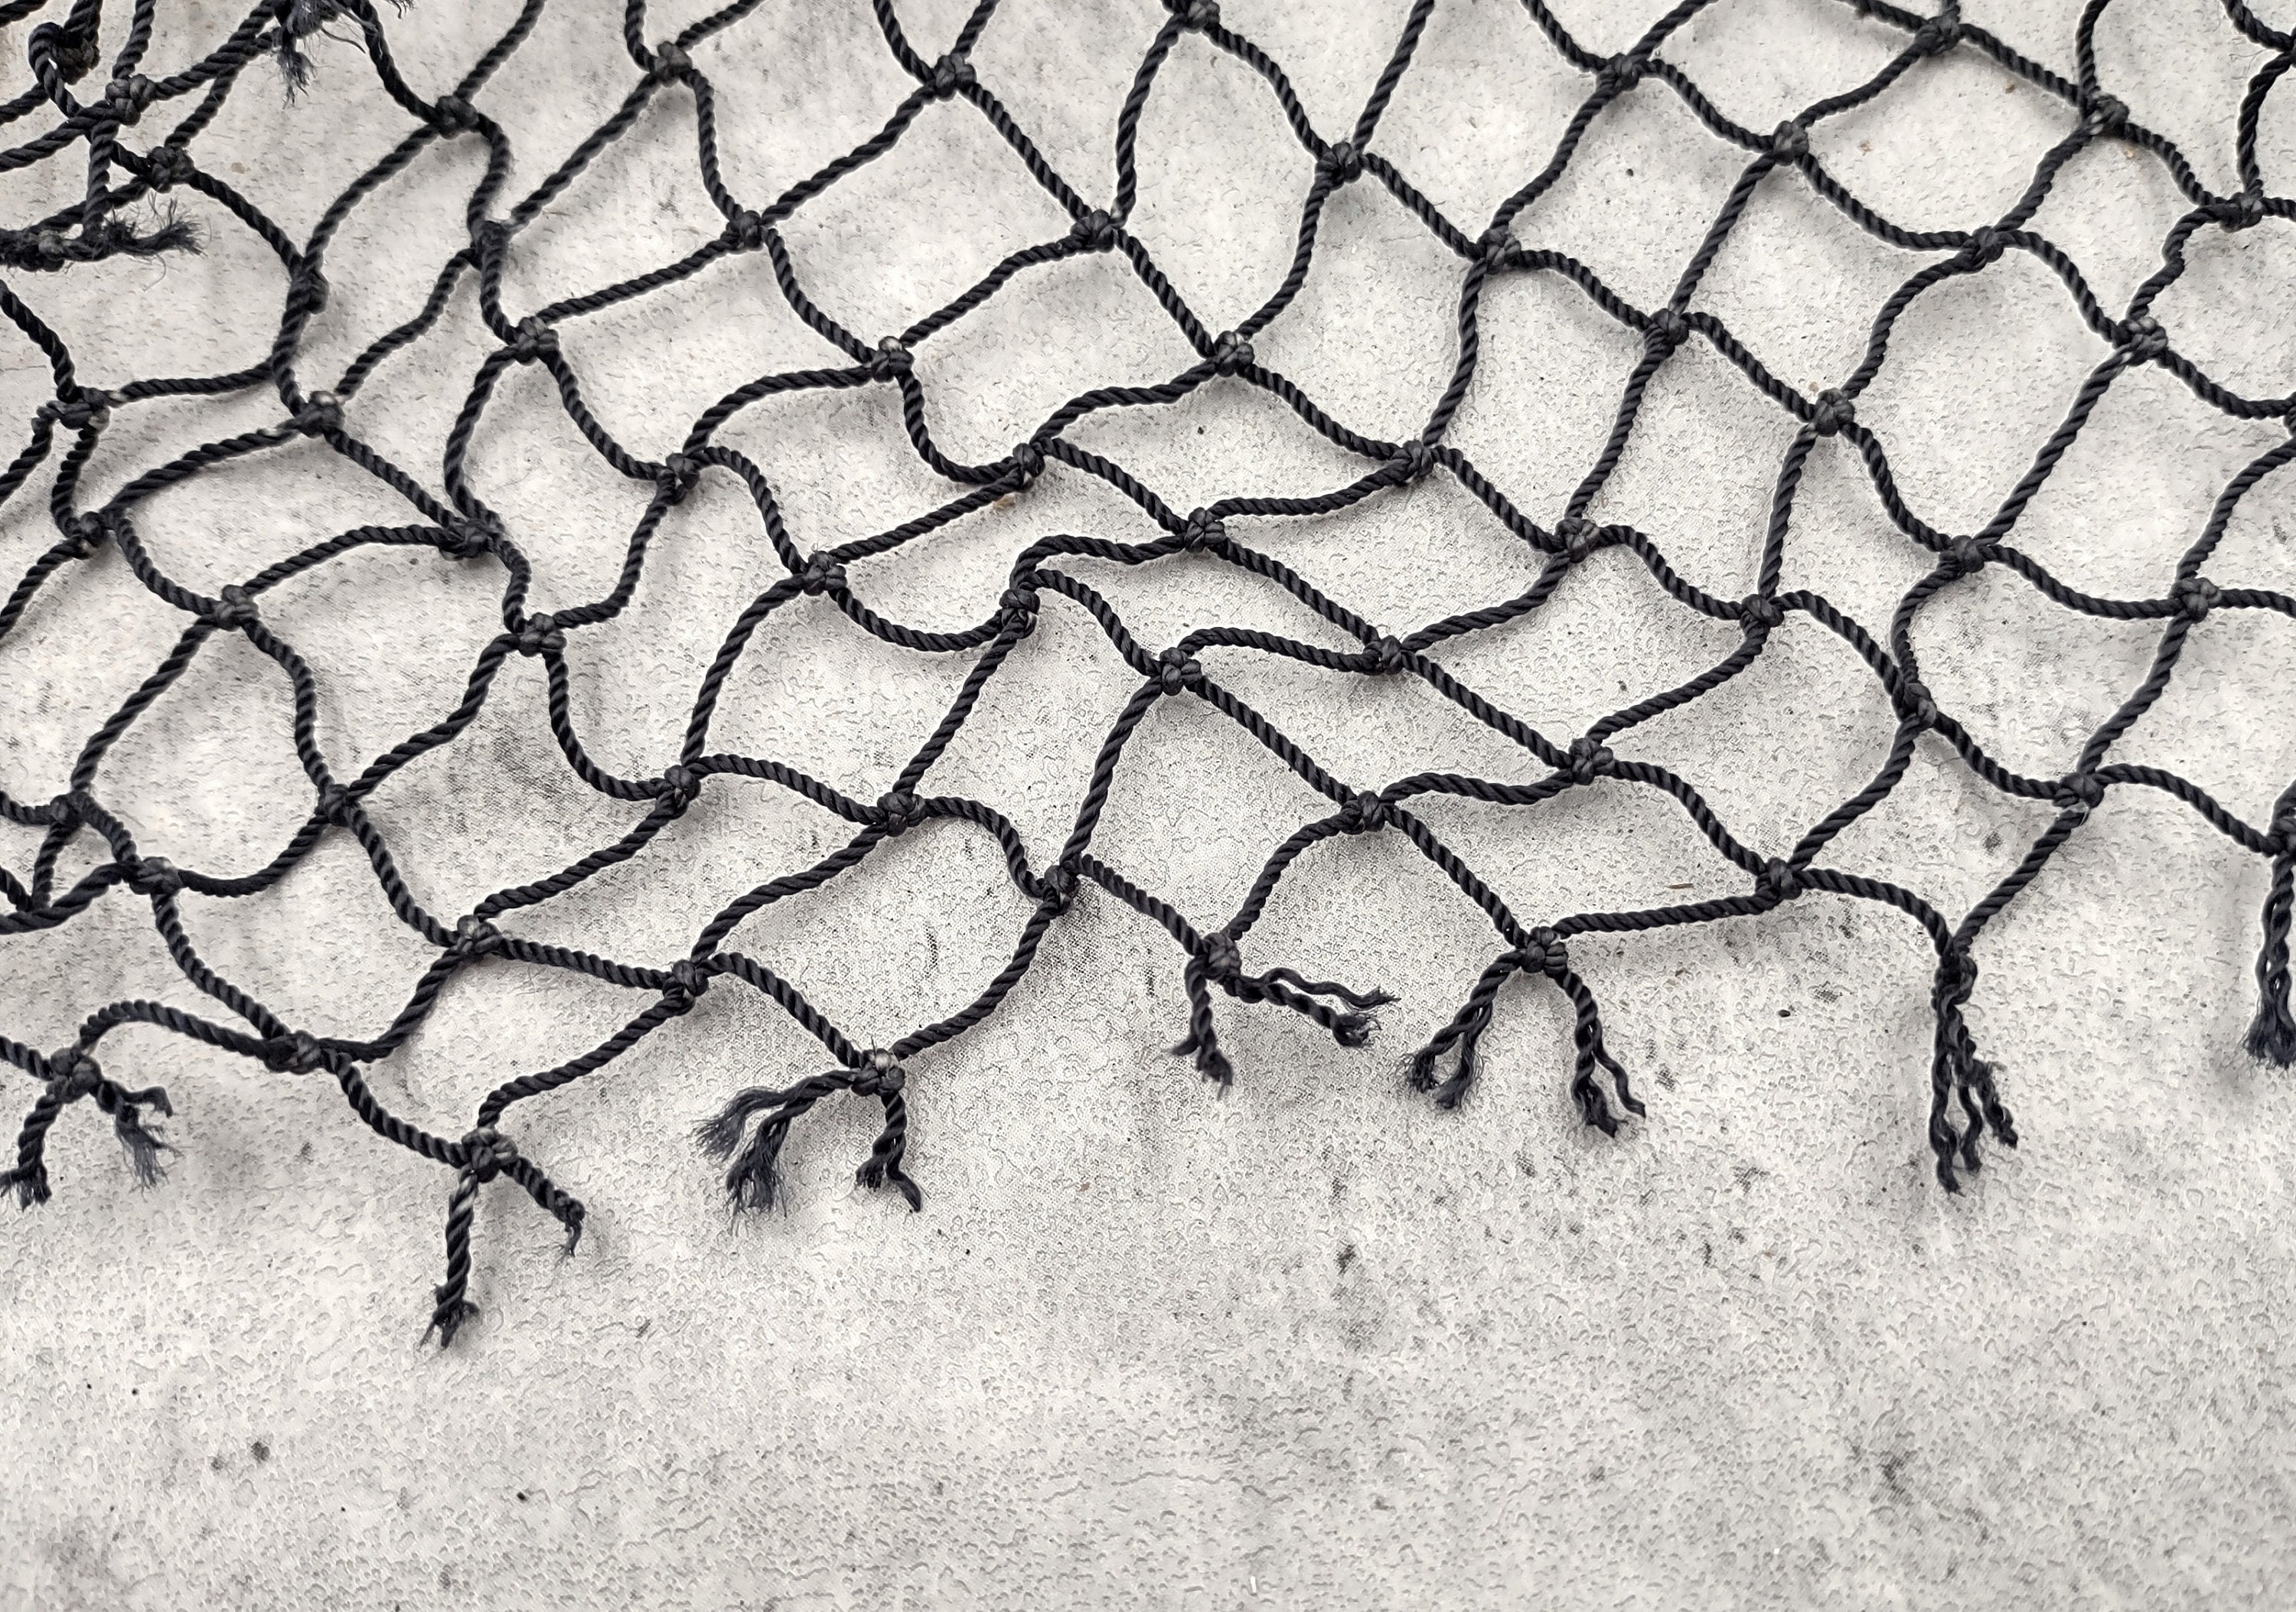 Decorative Fish Net Tied Black Nylon approx. 4X9 Feet Fishing Net